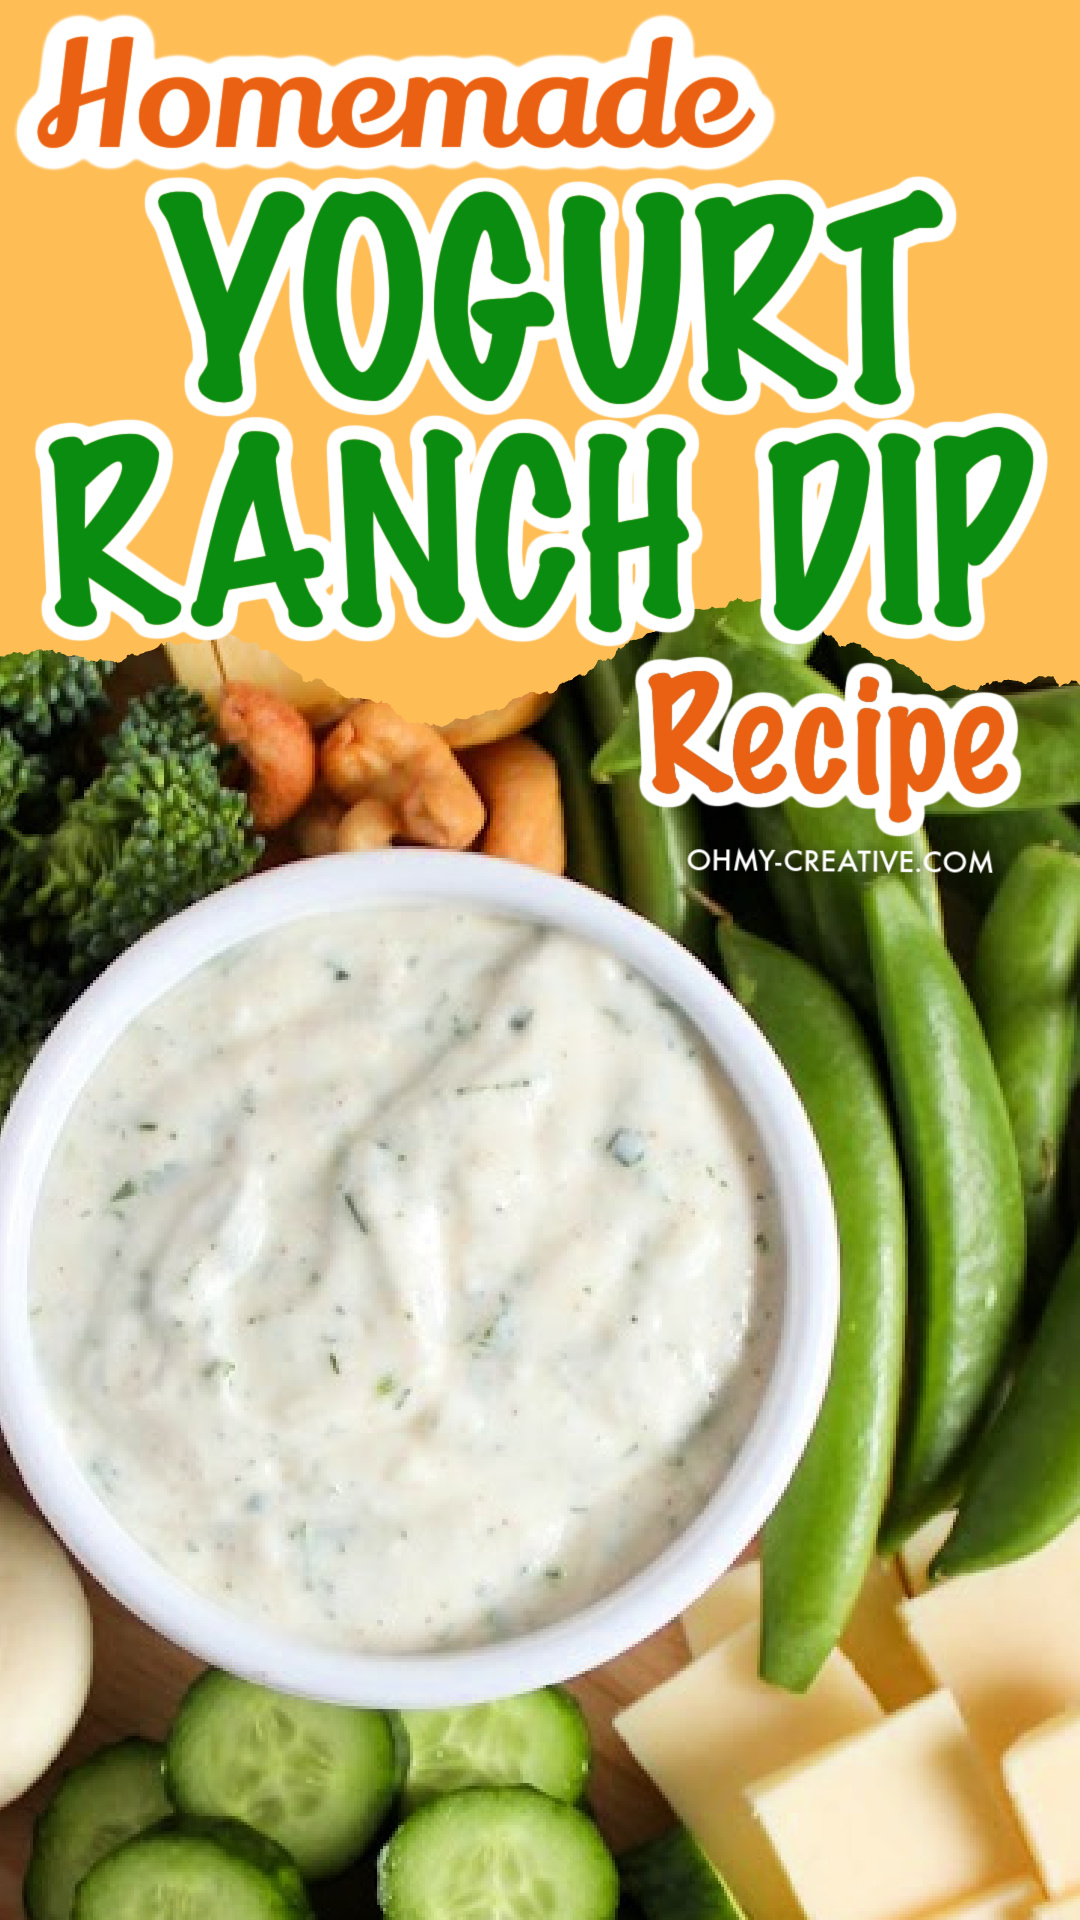 Yogurt Ranch Dip Recipe